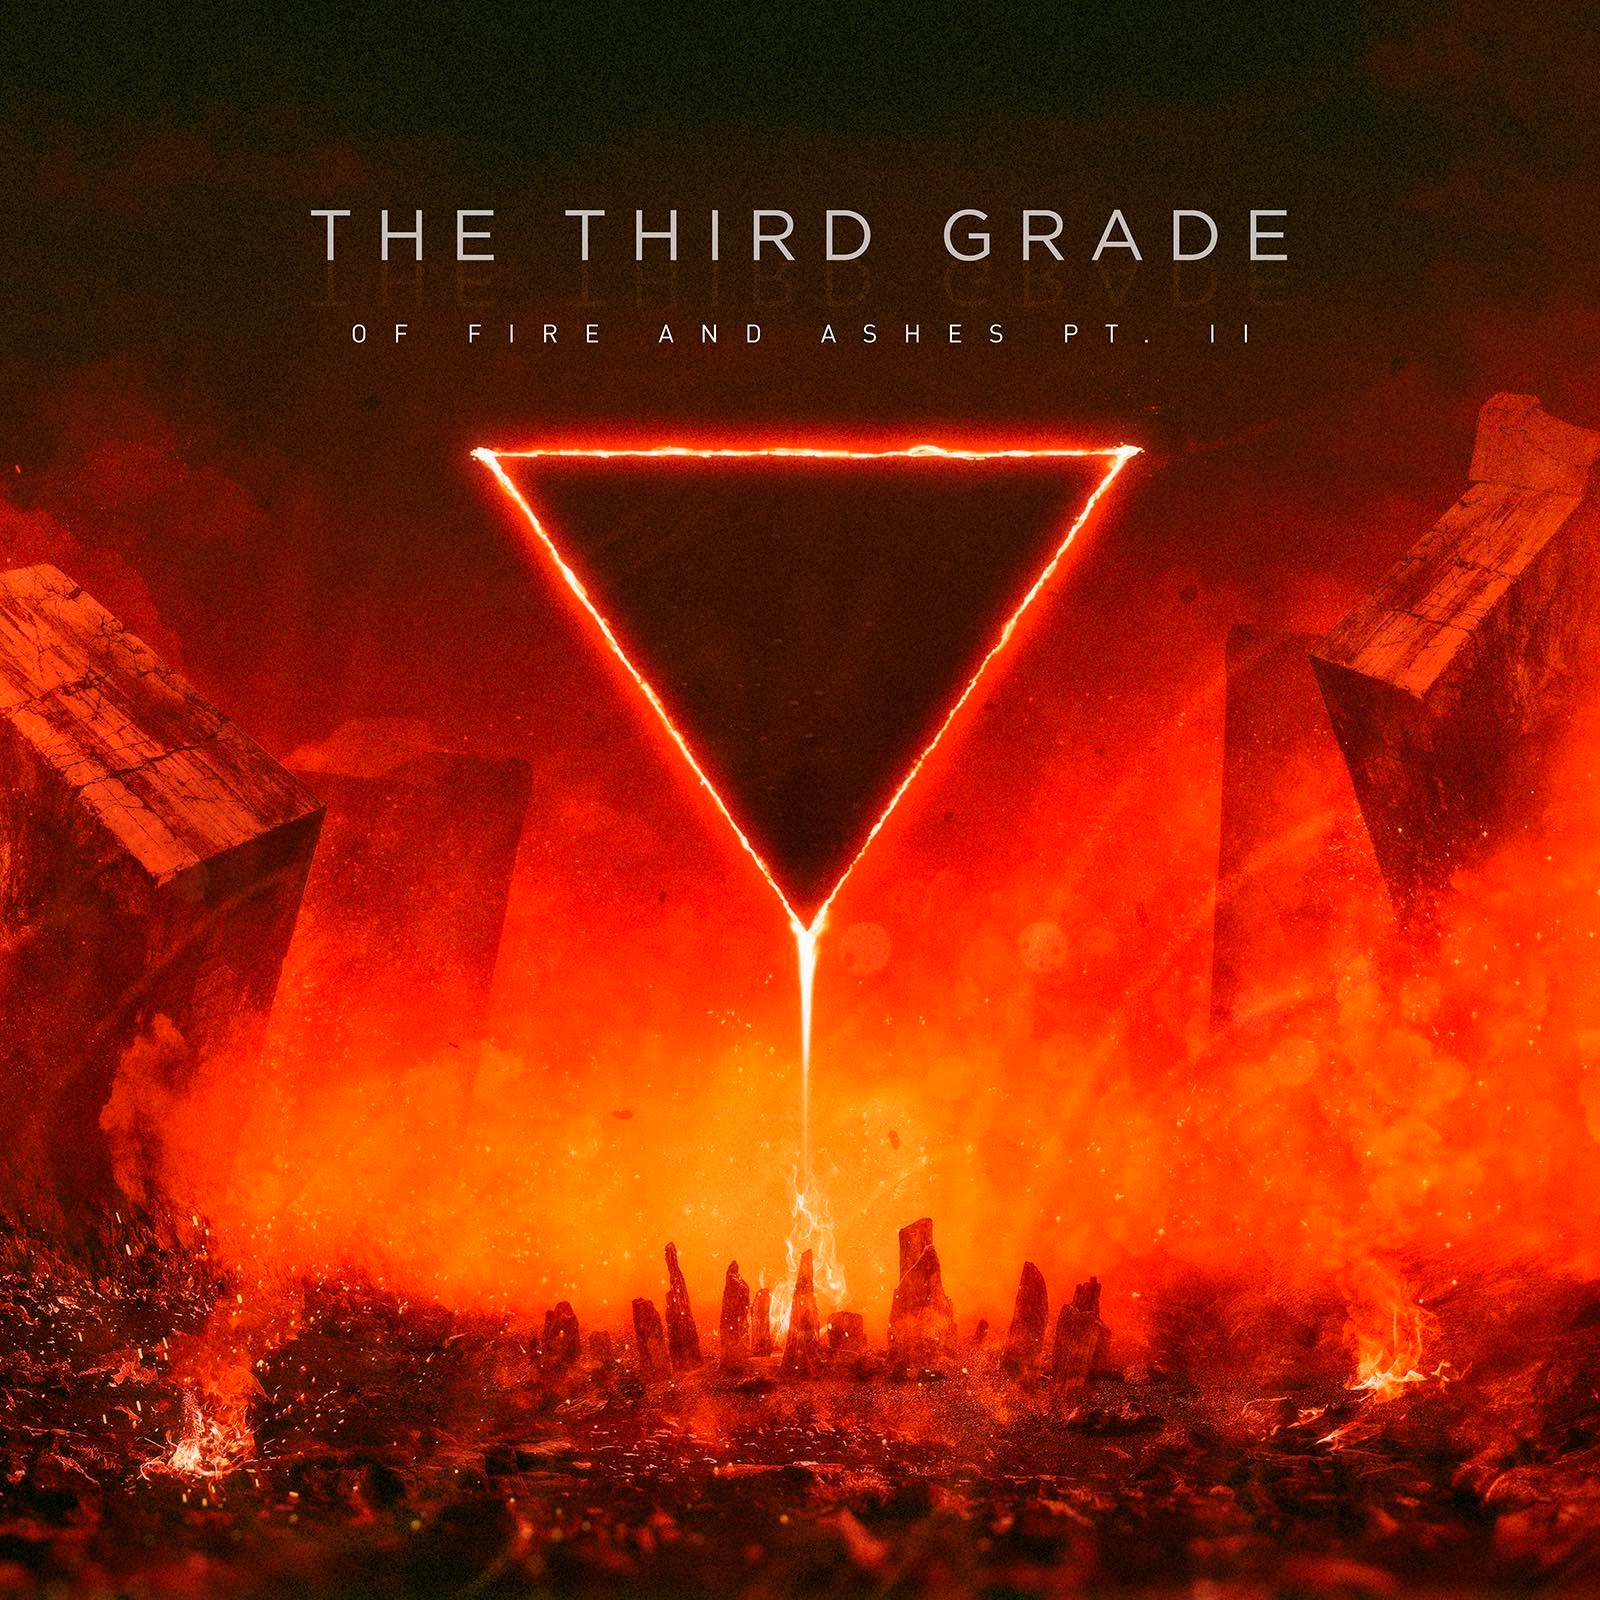 [Reseña] “Of Fire and Ashes part II” nuevo disco de The Third Grade